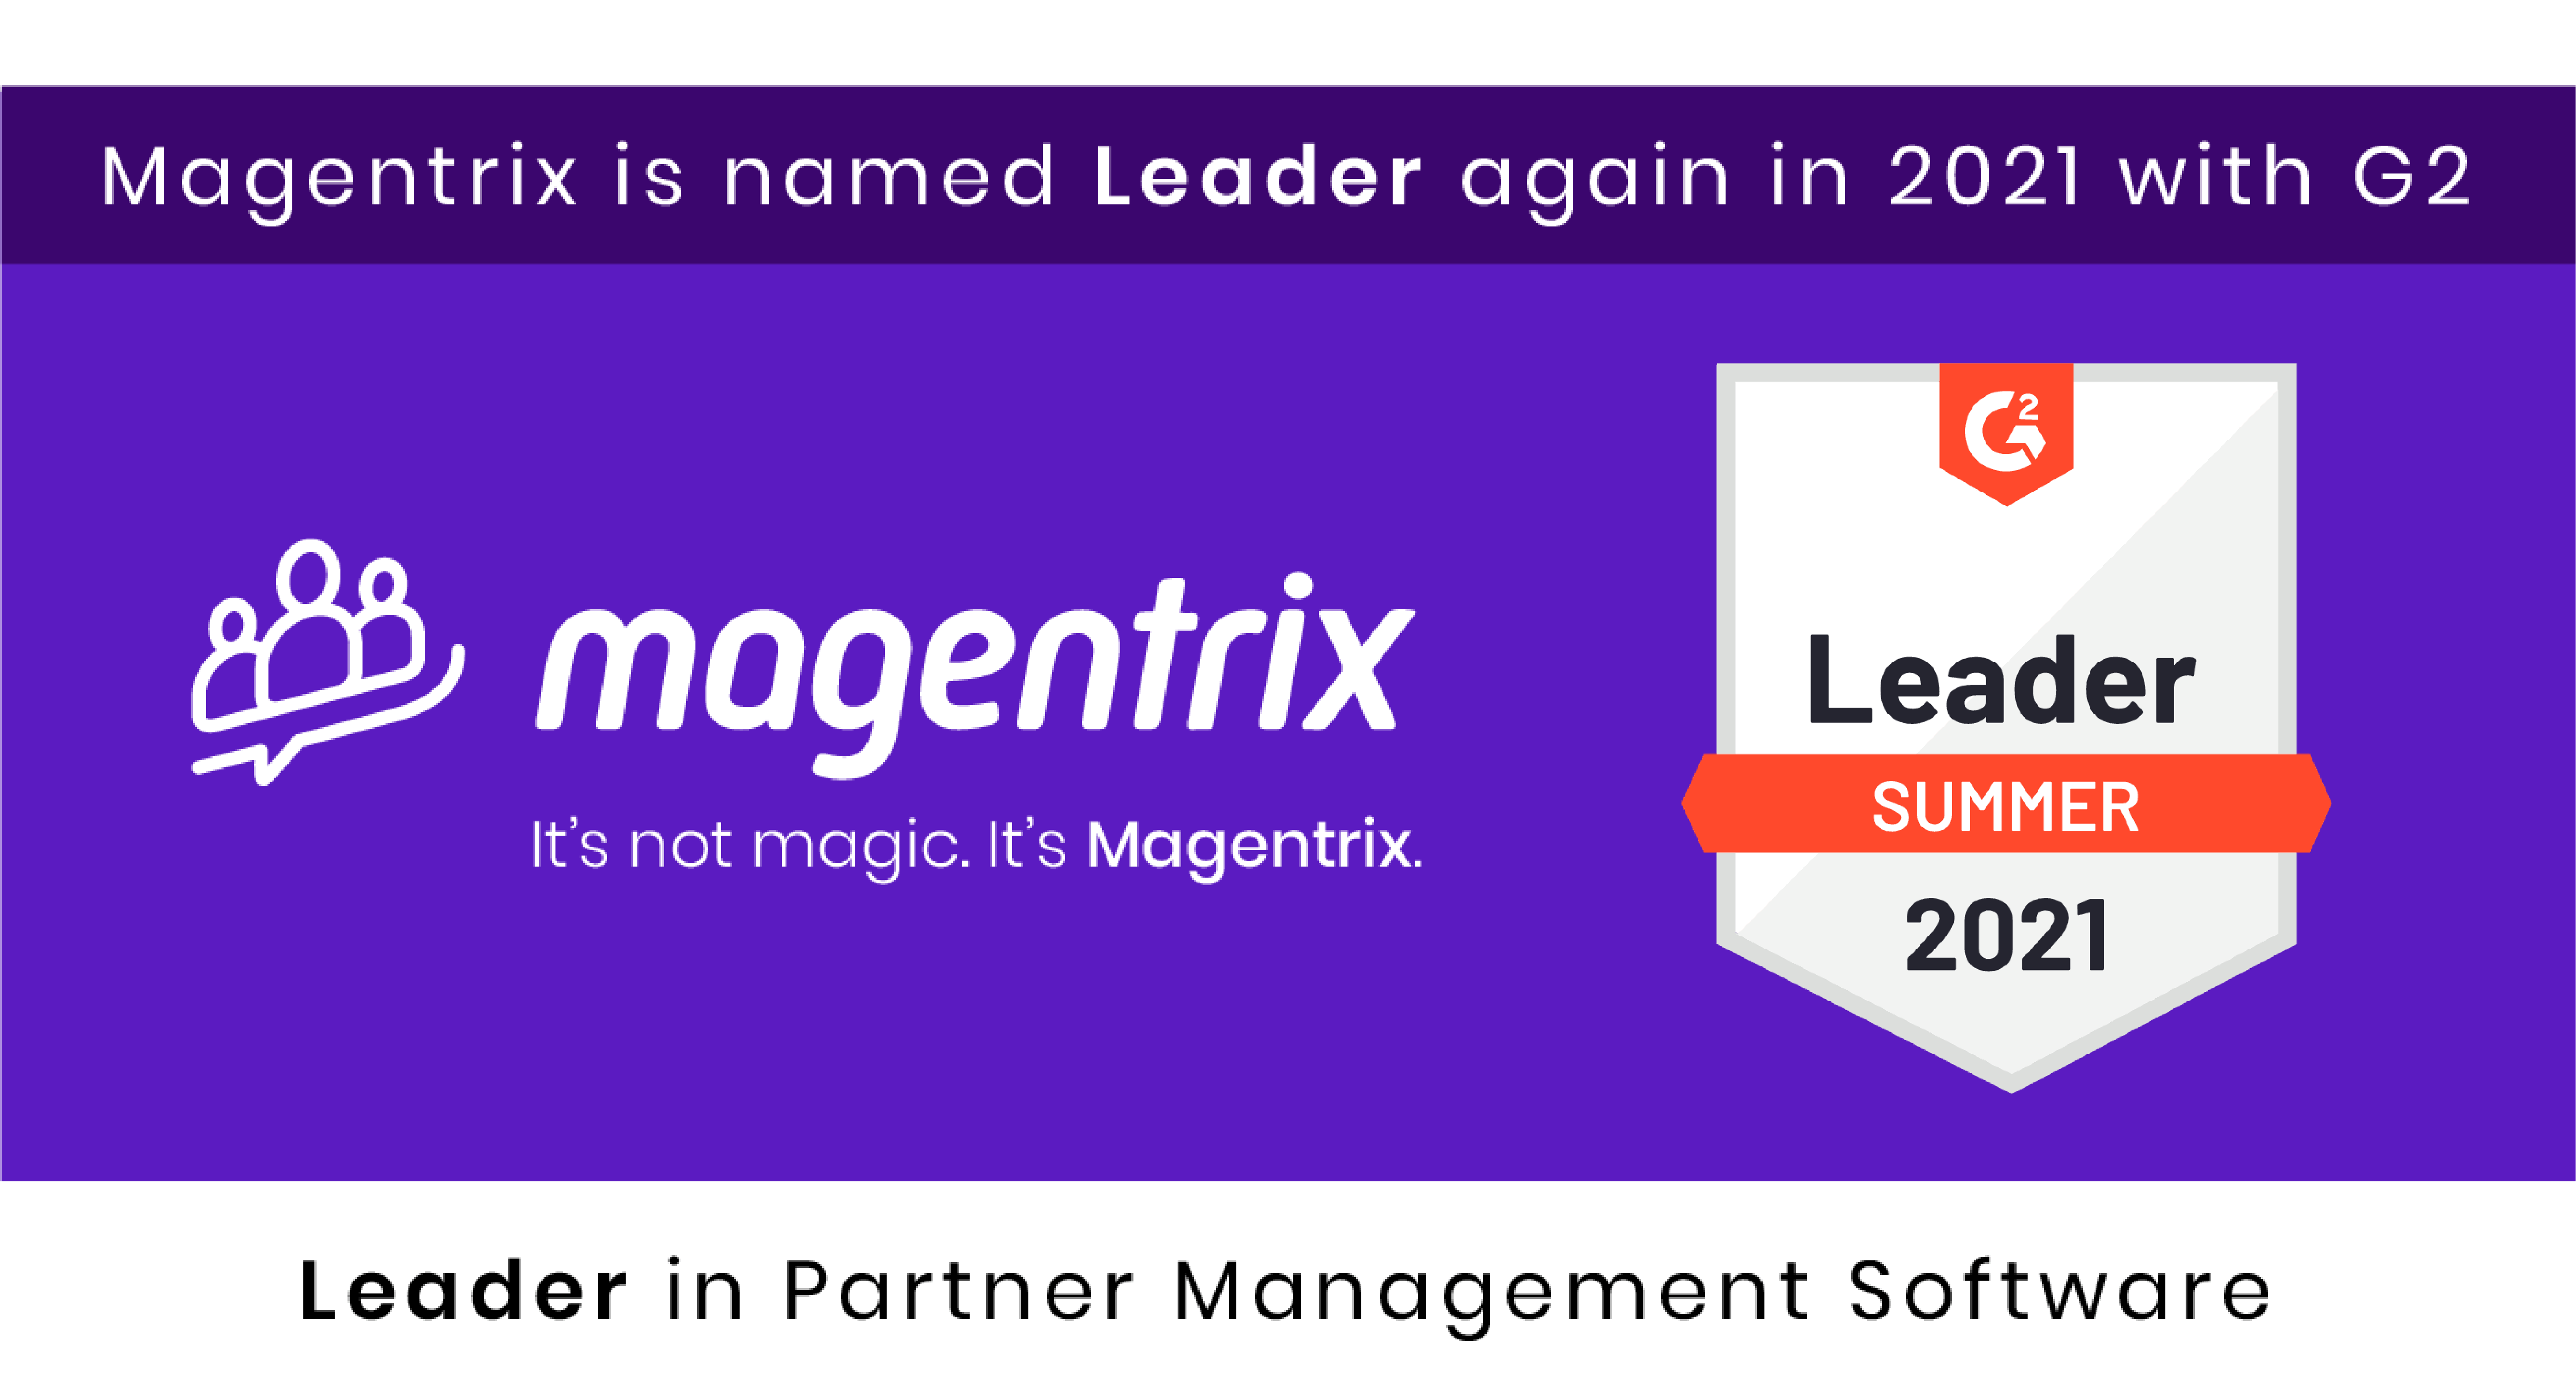 Magentrix named a Leader in Summer 2021 with G2 in Partner Management software